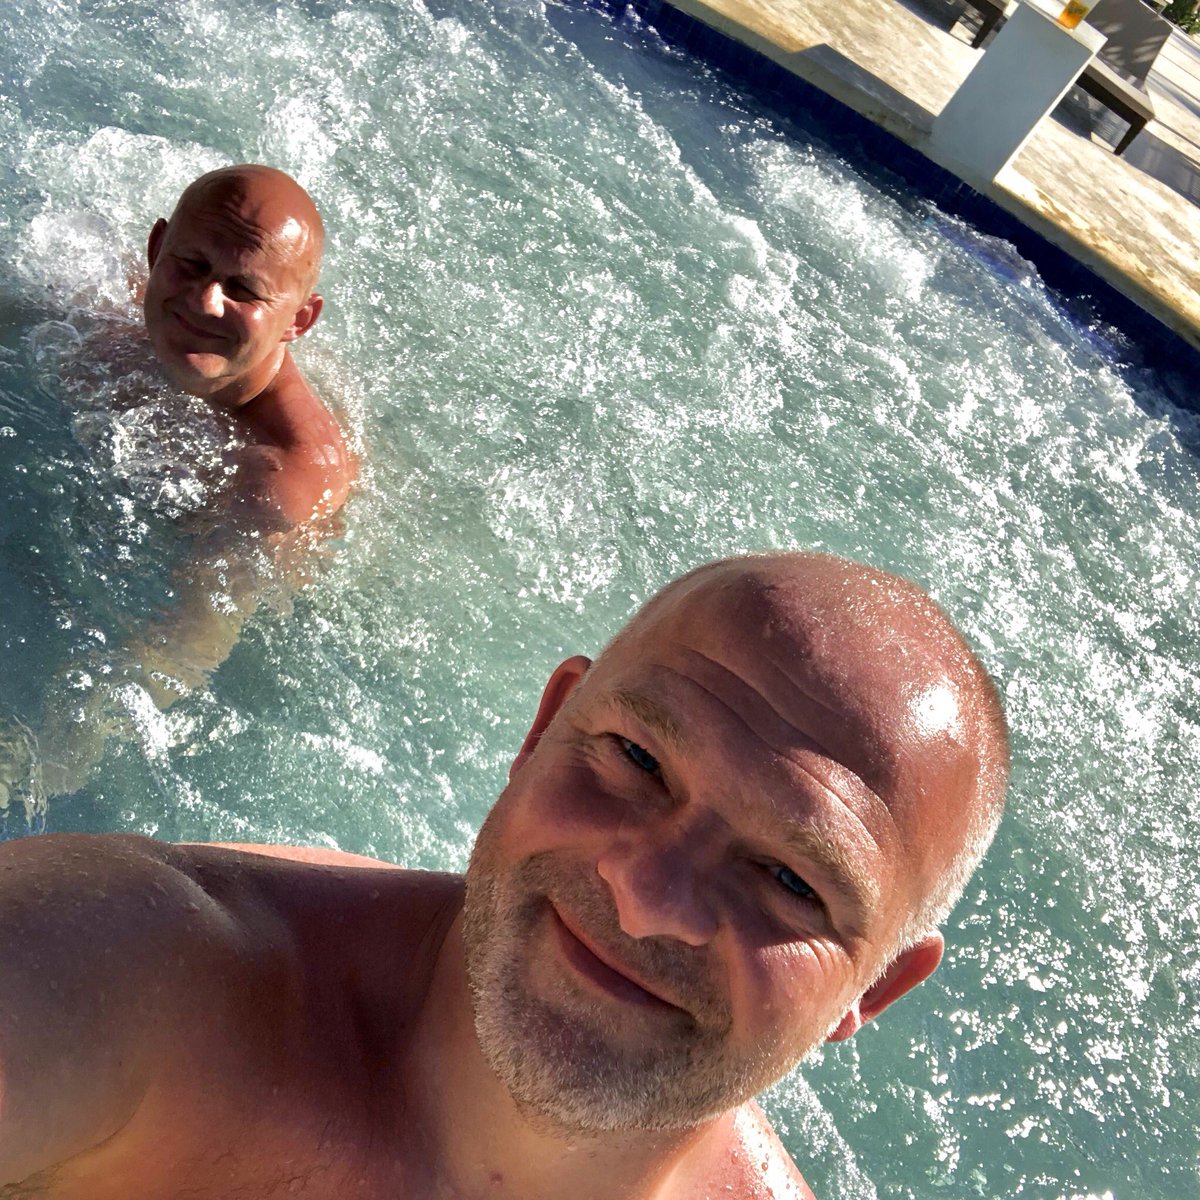 Having a bubble bath in the sun 😁☀️🏝 #puntacana #DominicanRepublic #royaltonbavaro